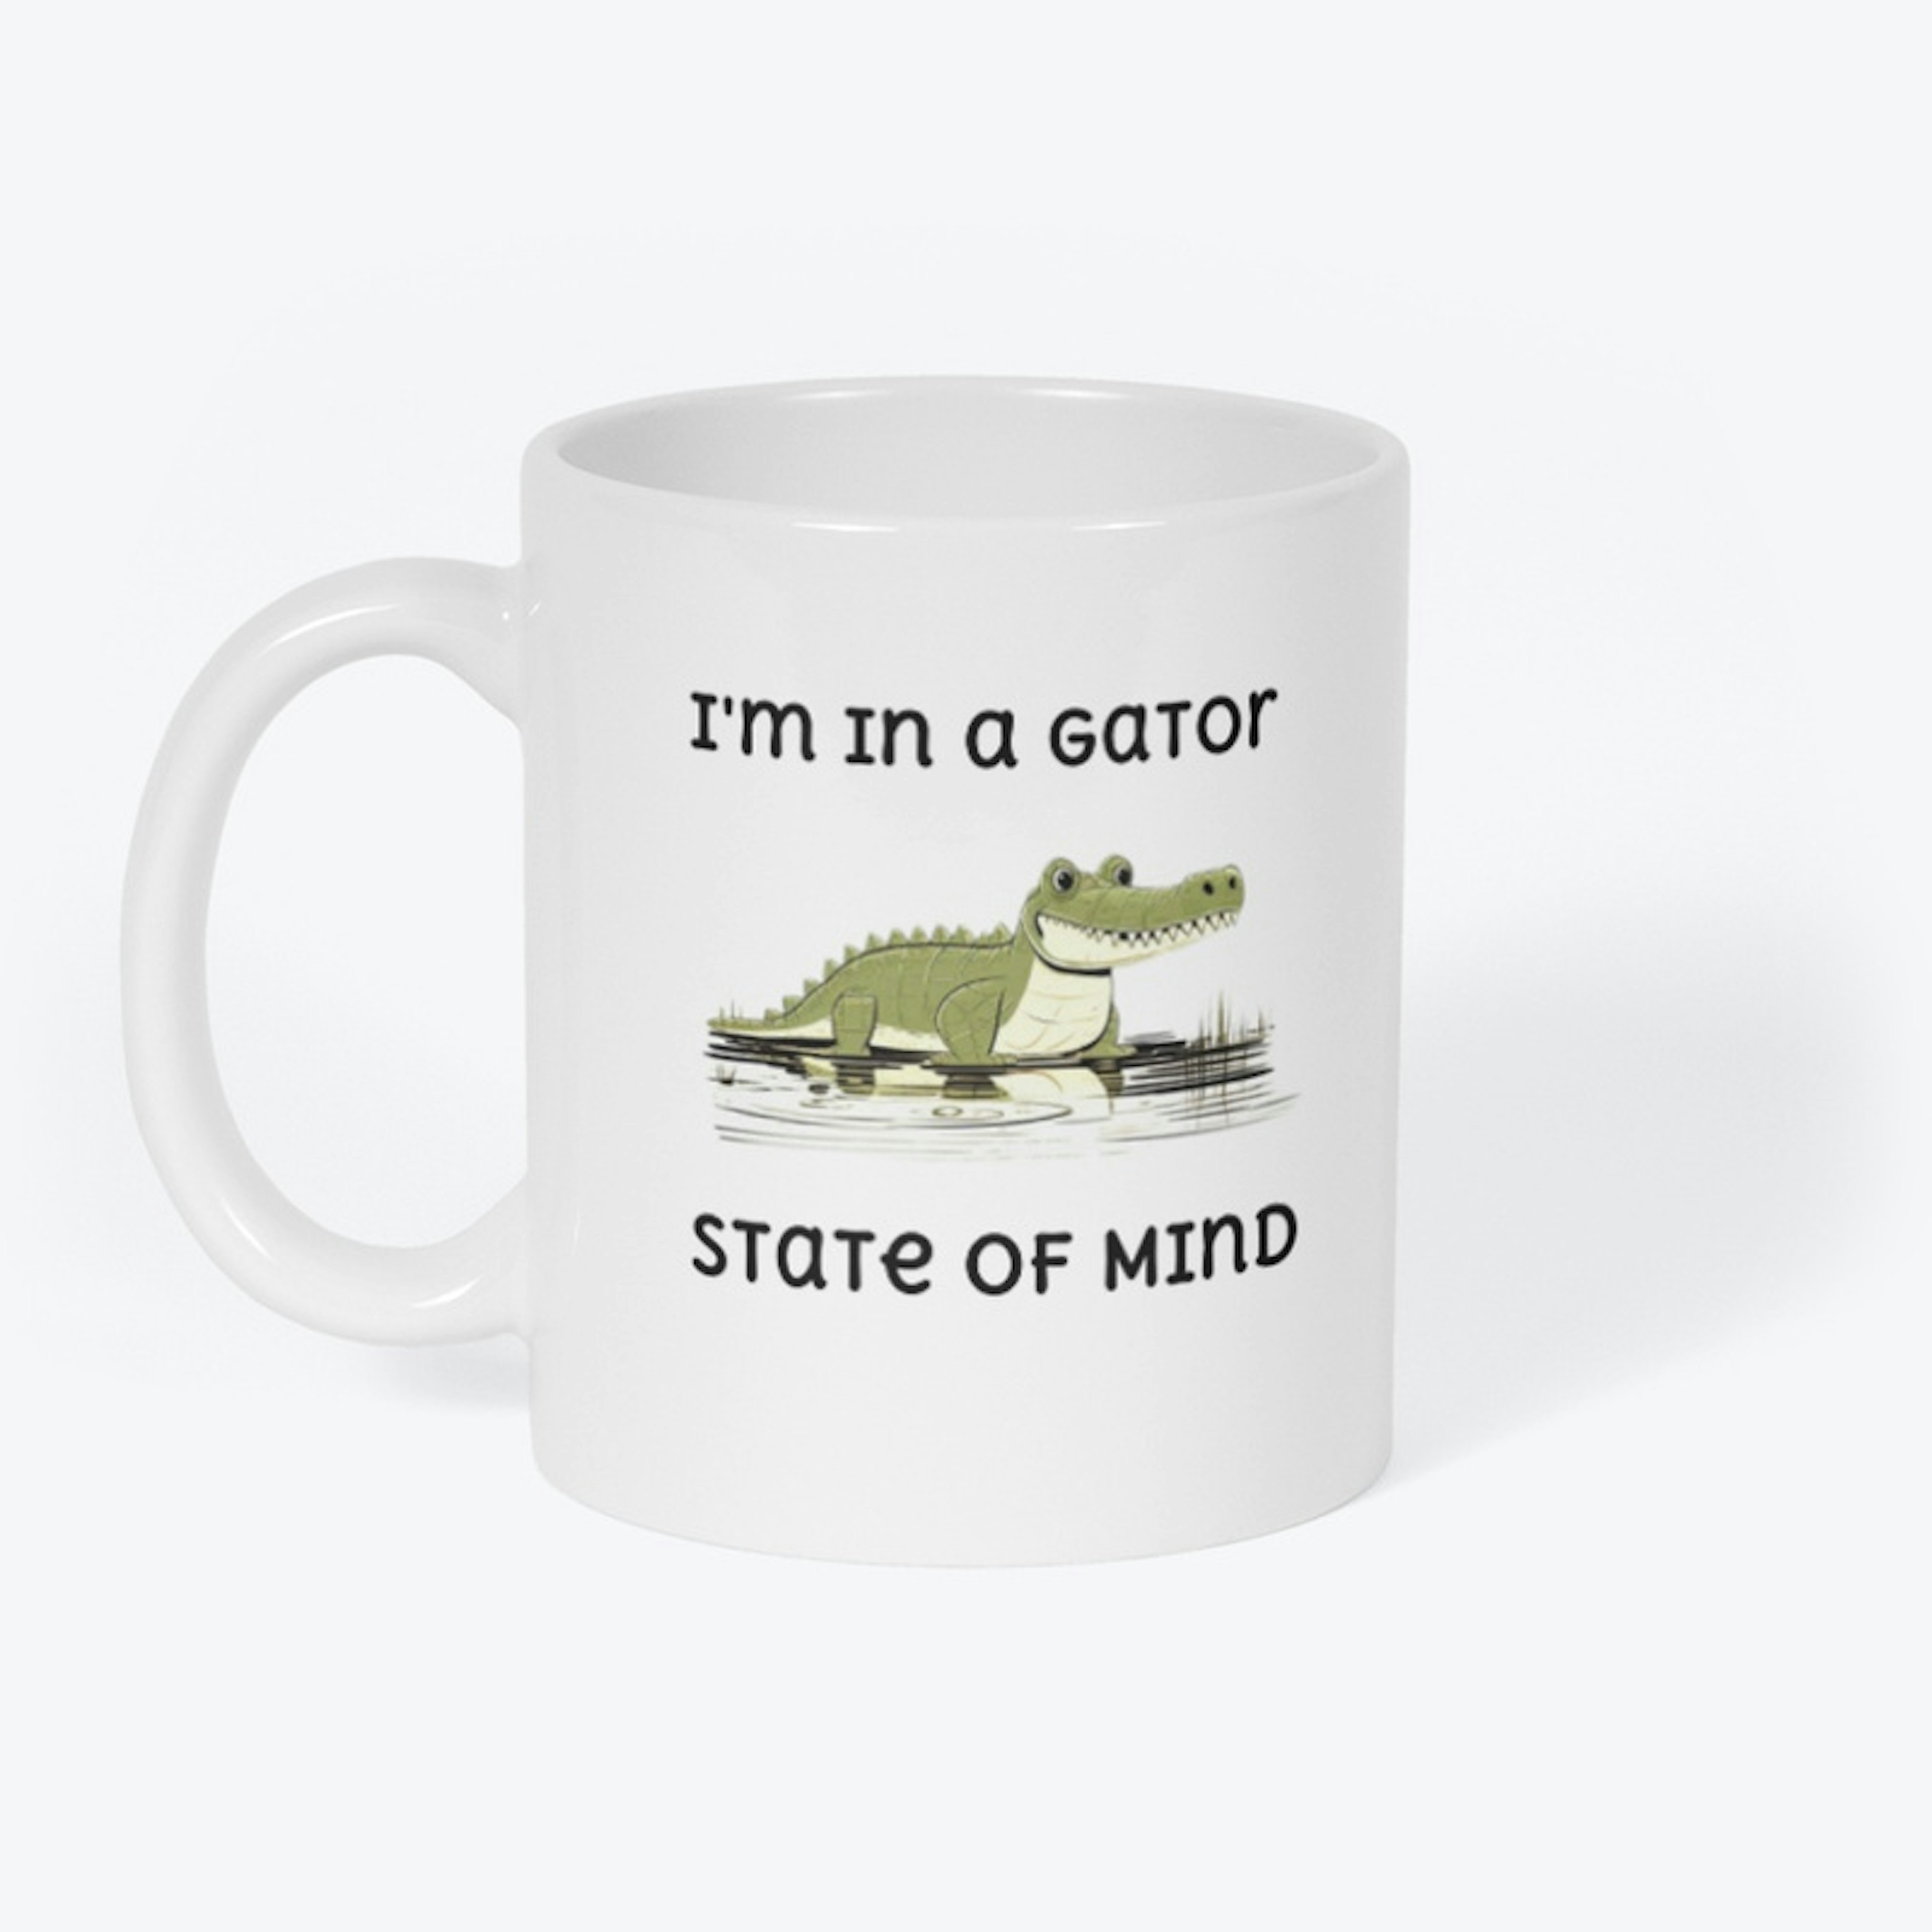 I'm in a Gator state of mind